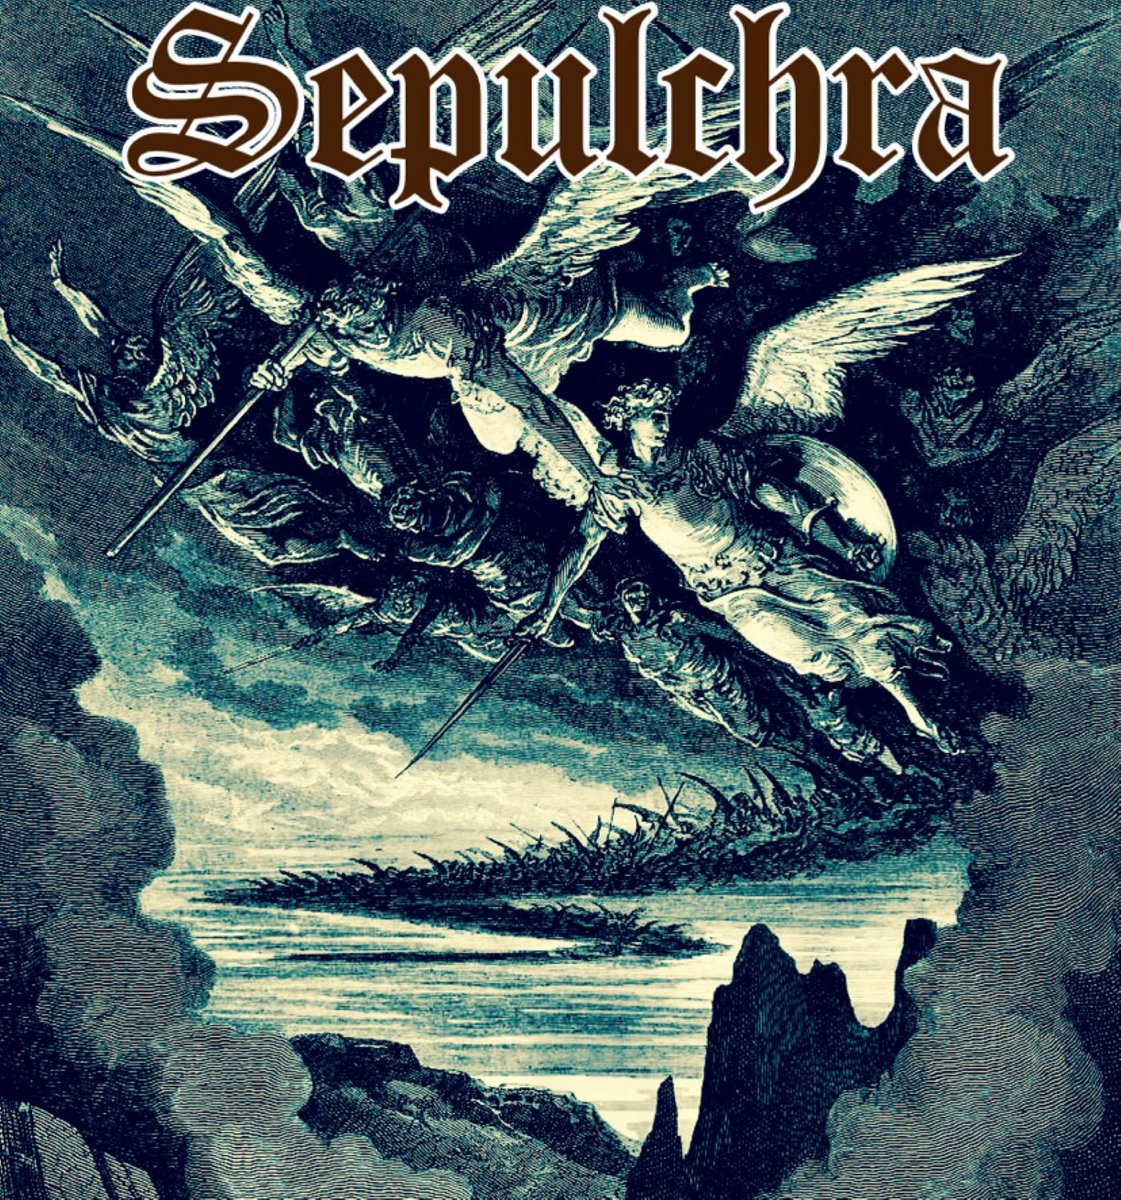 Interview with SEPULCHRA